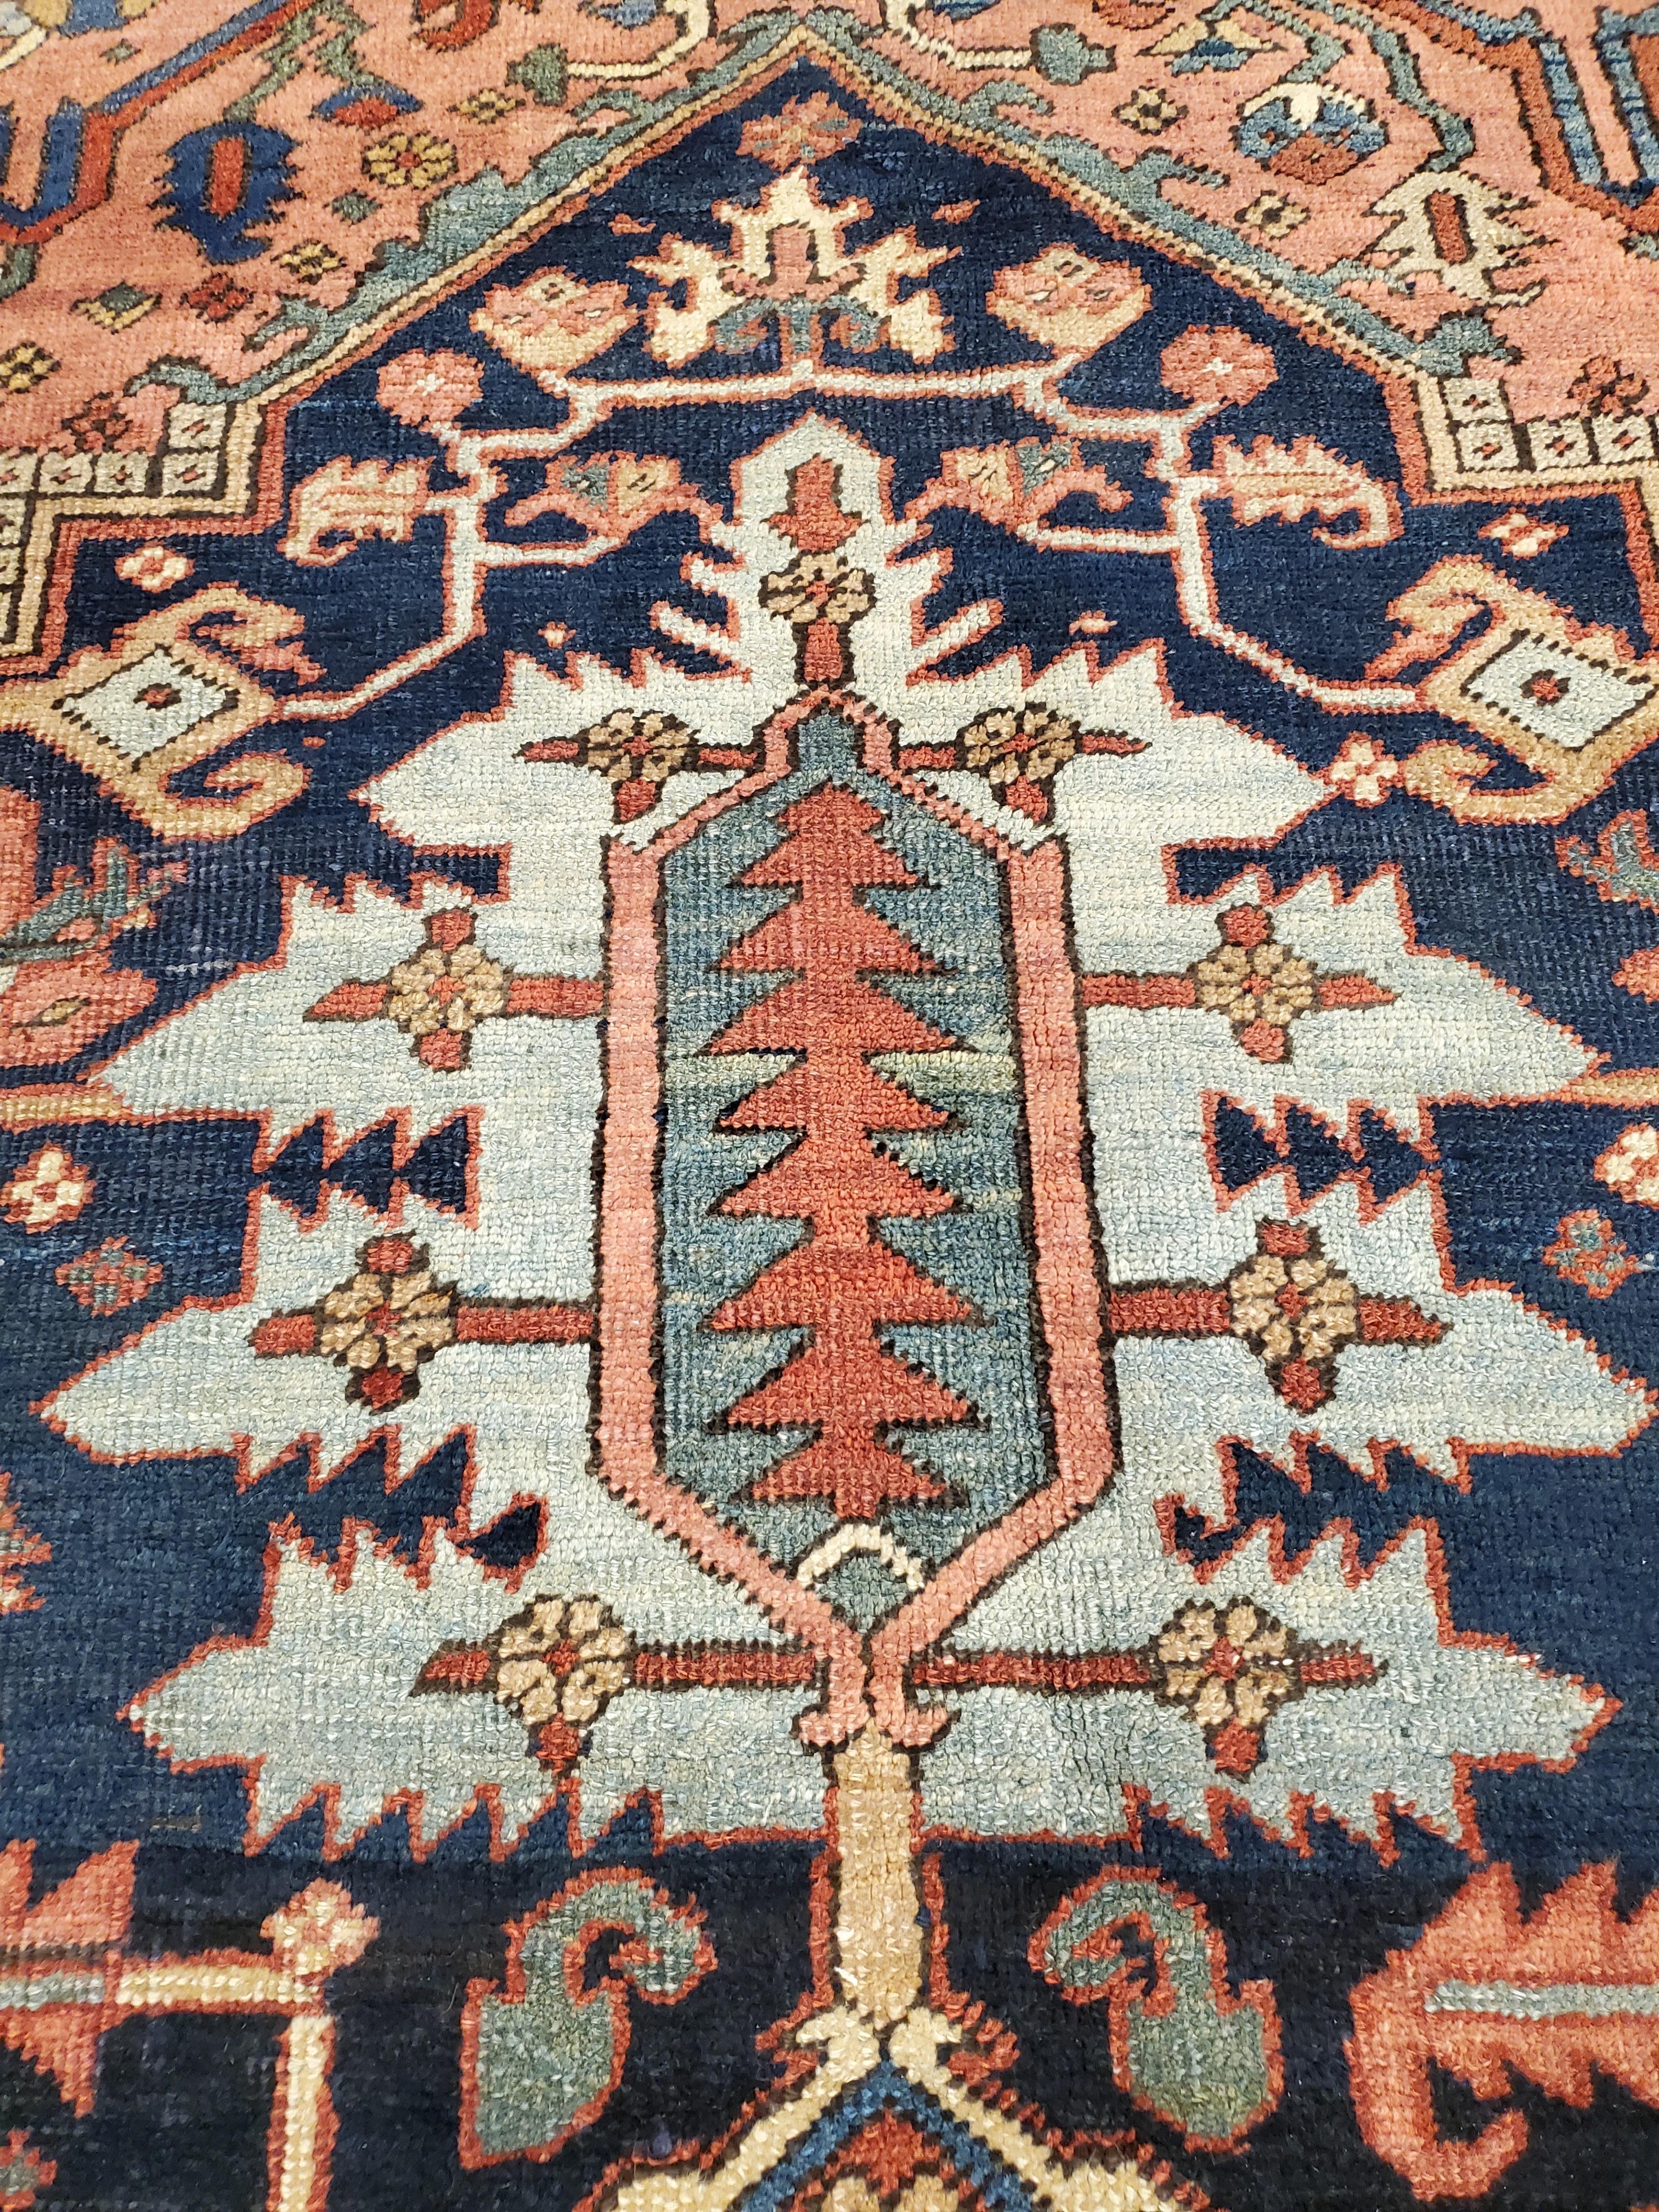 Antique Persian Heriz Carpet Handmade Wool Oriental Rug, Rust, Navy, Light Blue For Sale 3